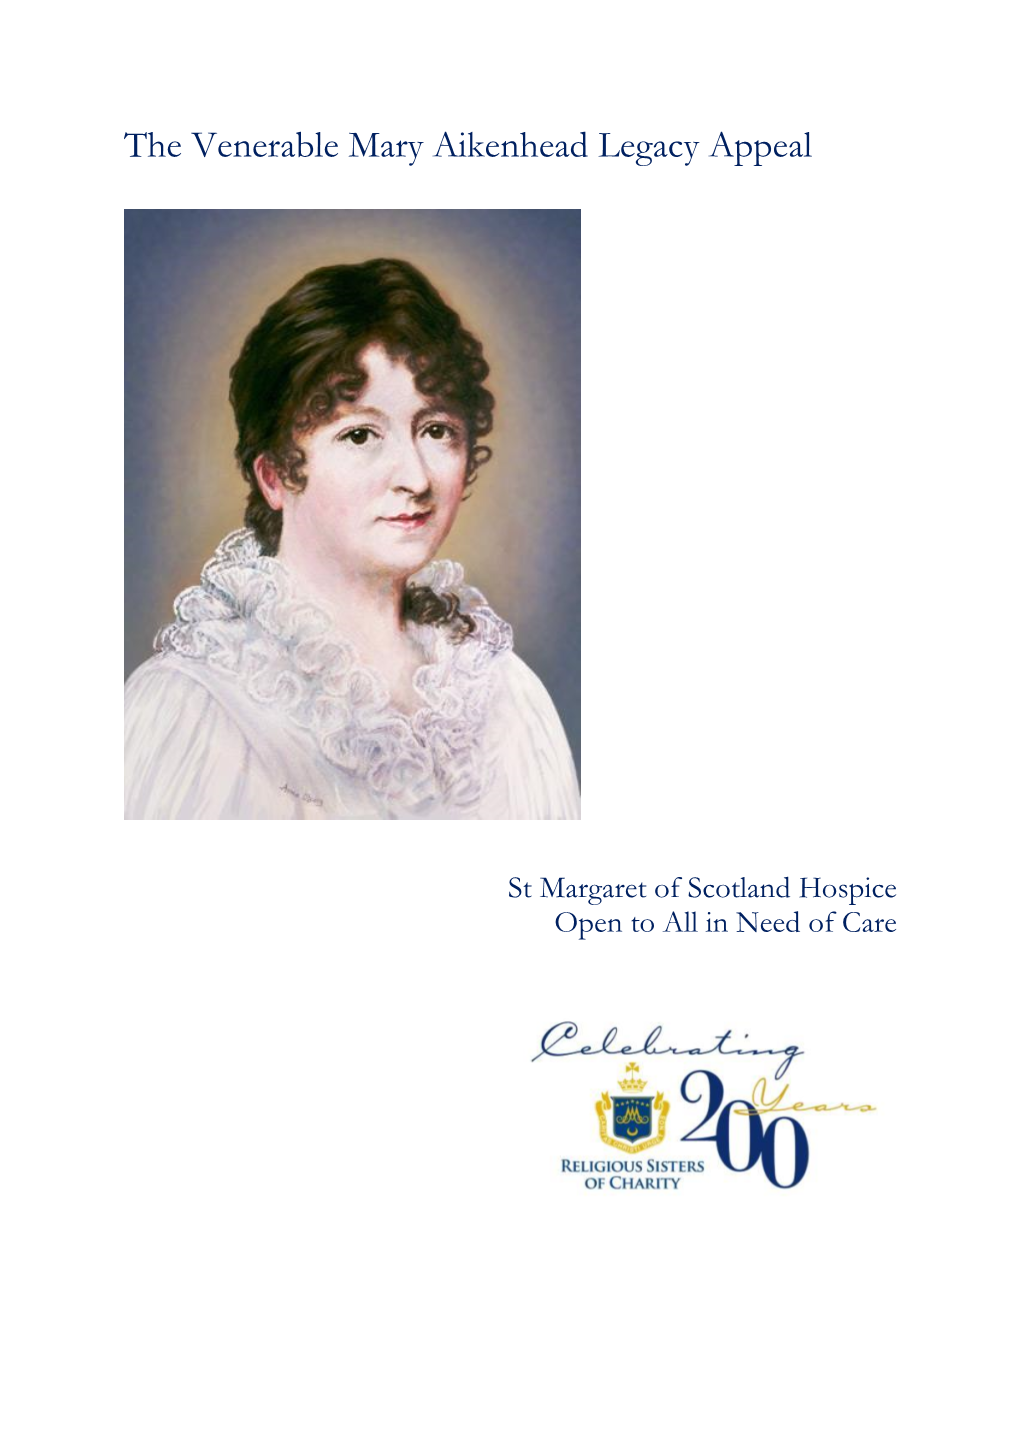 The Venerable Mary Aikenhead Legacy Appeal